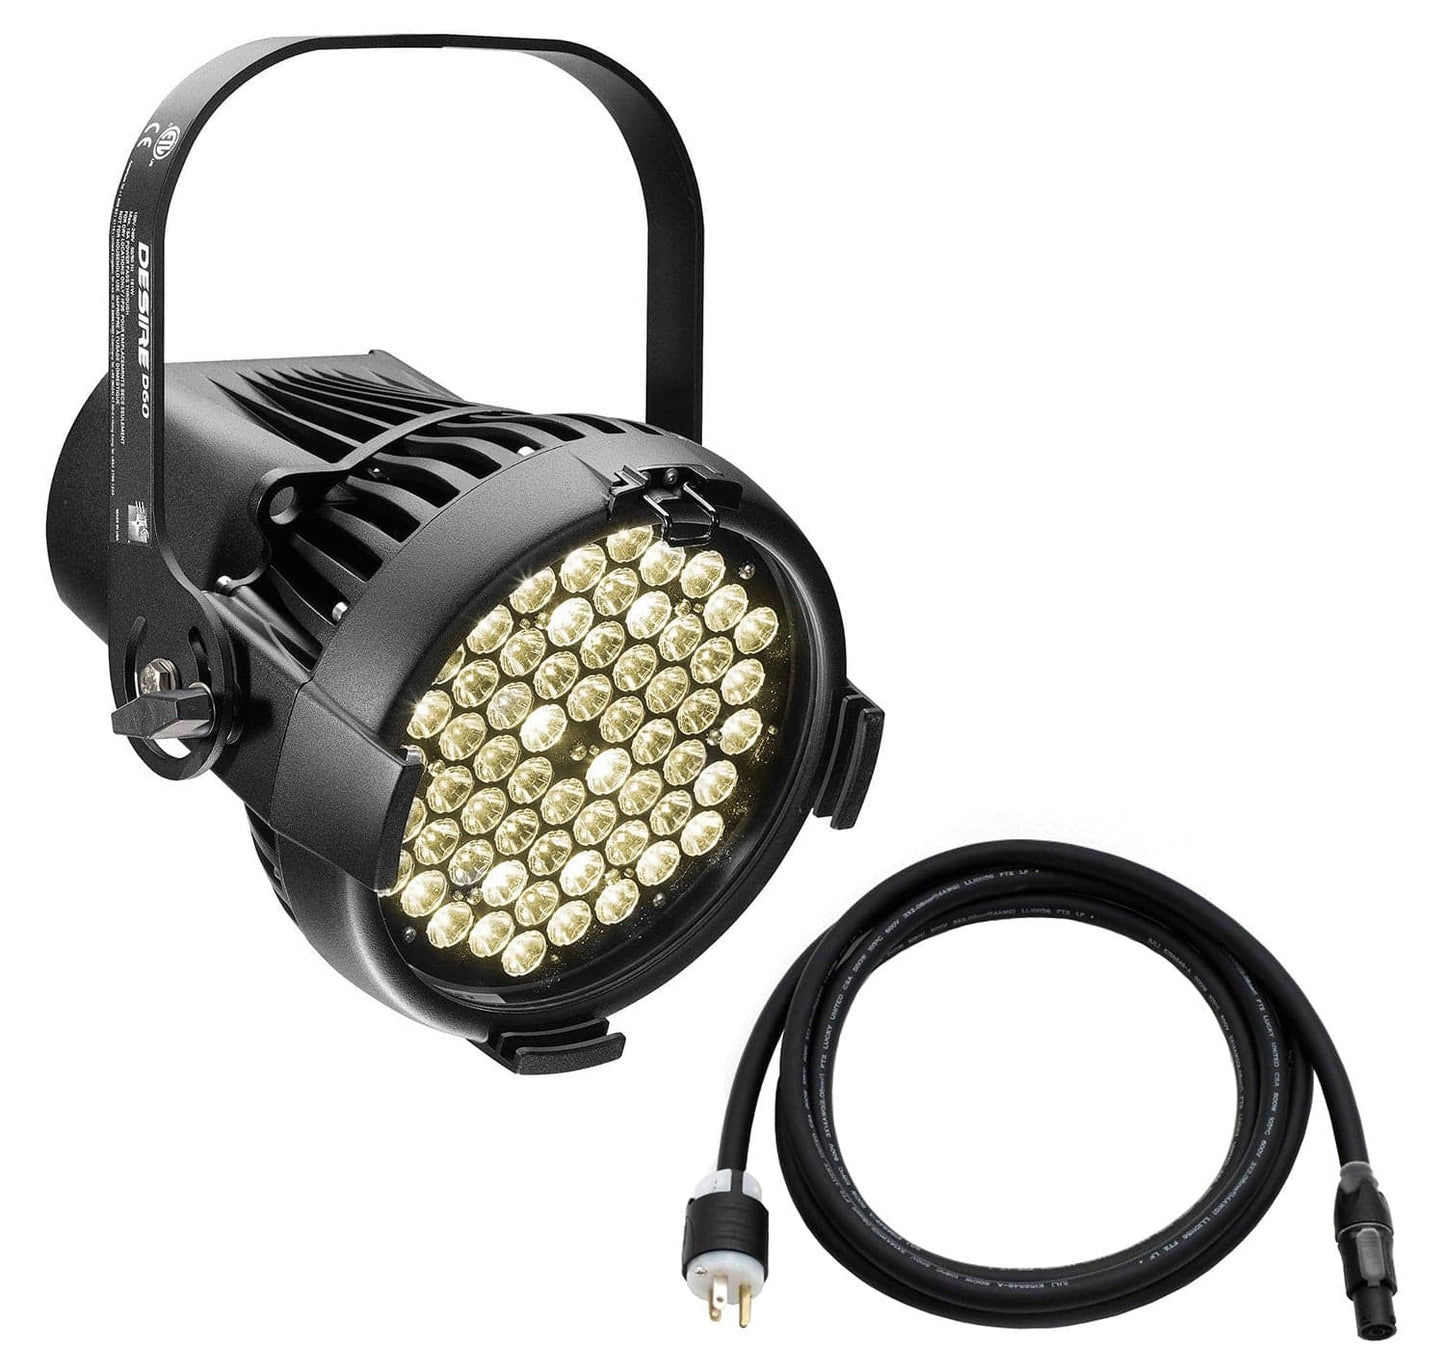 ETC Selador Desire D60 Studio Daylight LED Par with Edison Plug - Black - PSSL ProSound and Stage Lighting